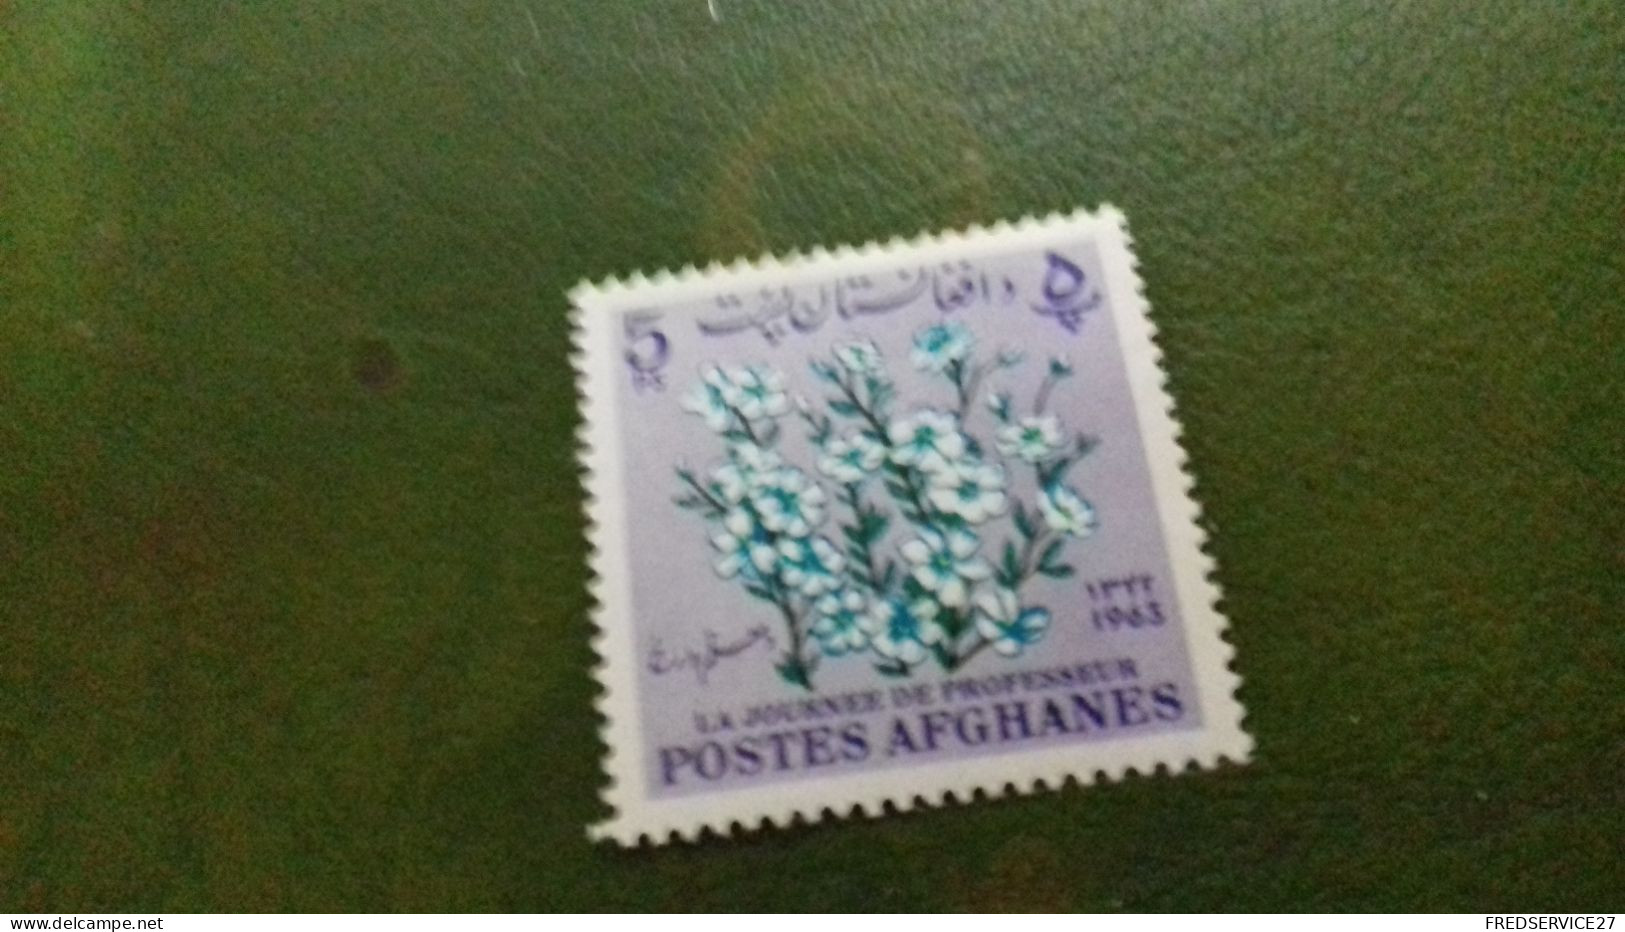 POSTES AFGHANES 1963 5PS LA JOURNEE DES PROFESSEUR NEUF - Afghanistan